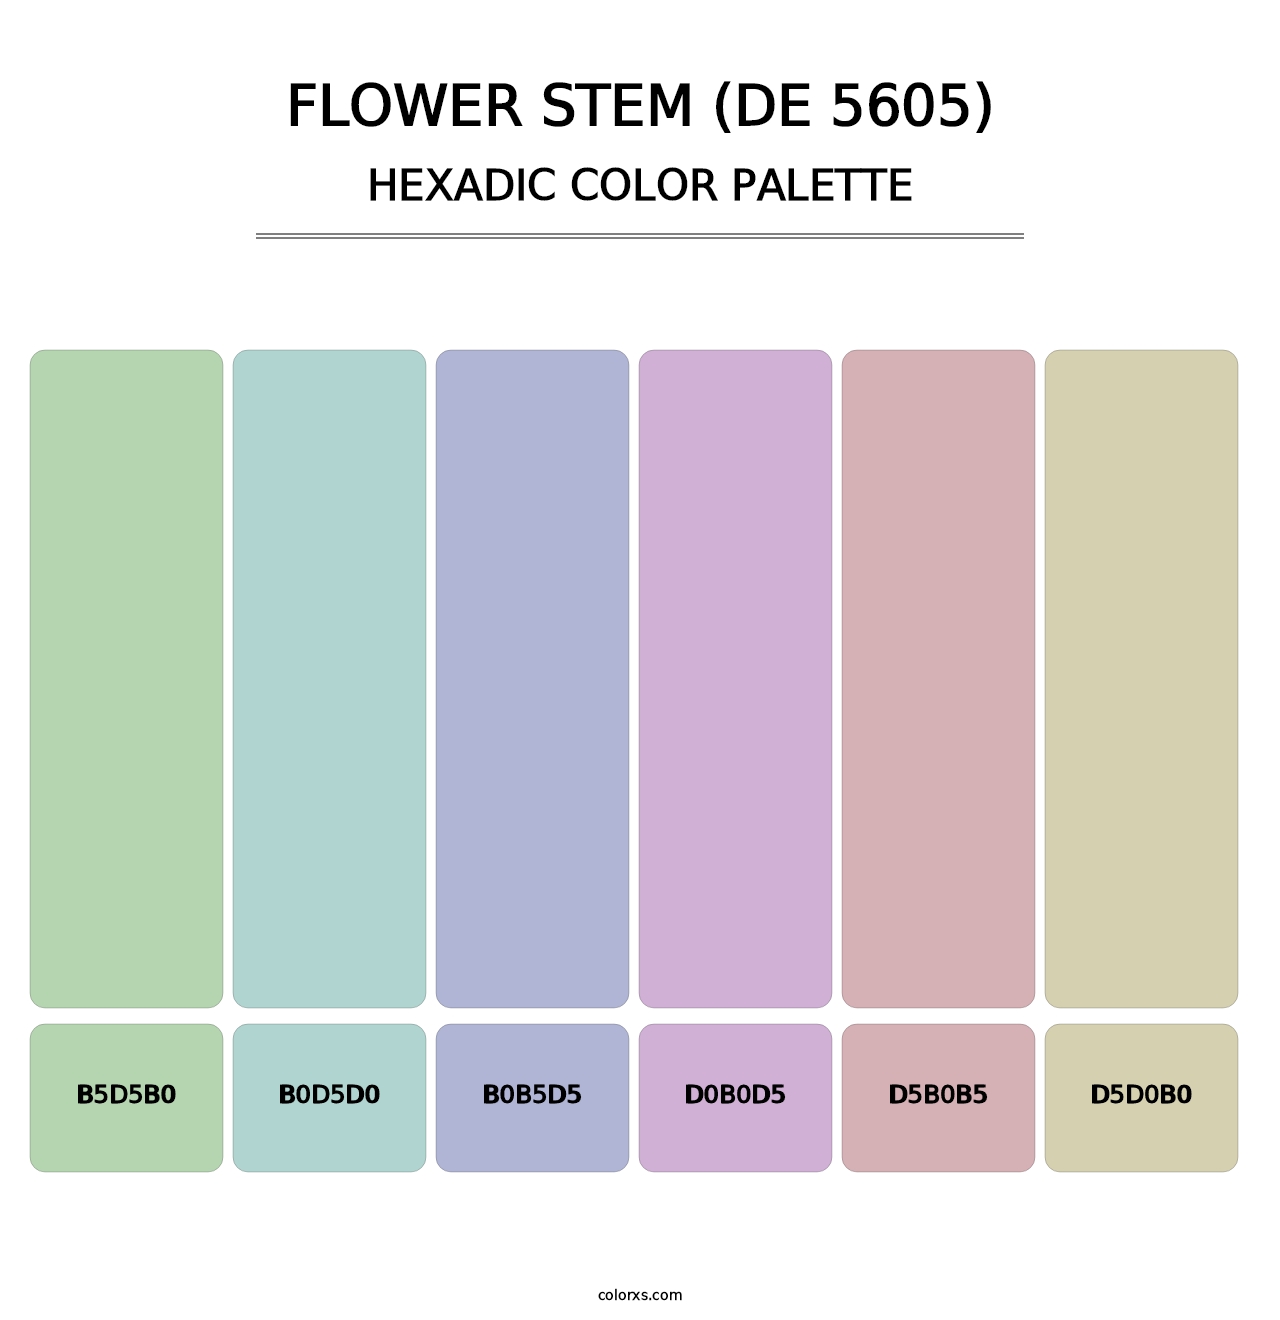 Flower Stem (DE 5605) - Hexadic Color Palette